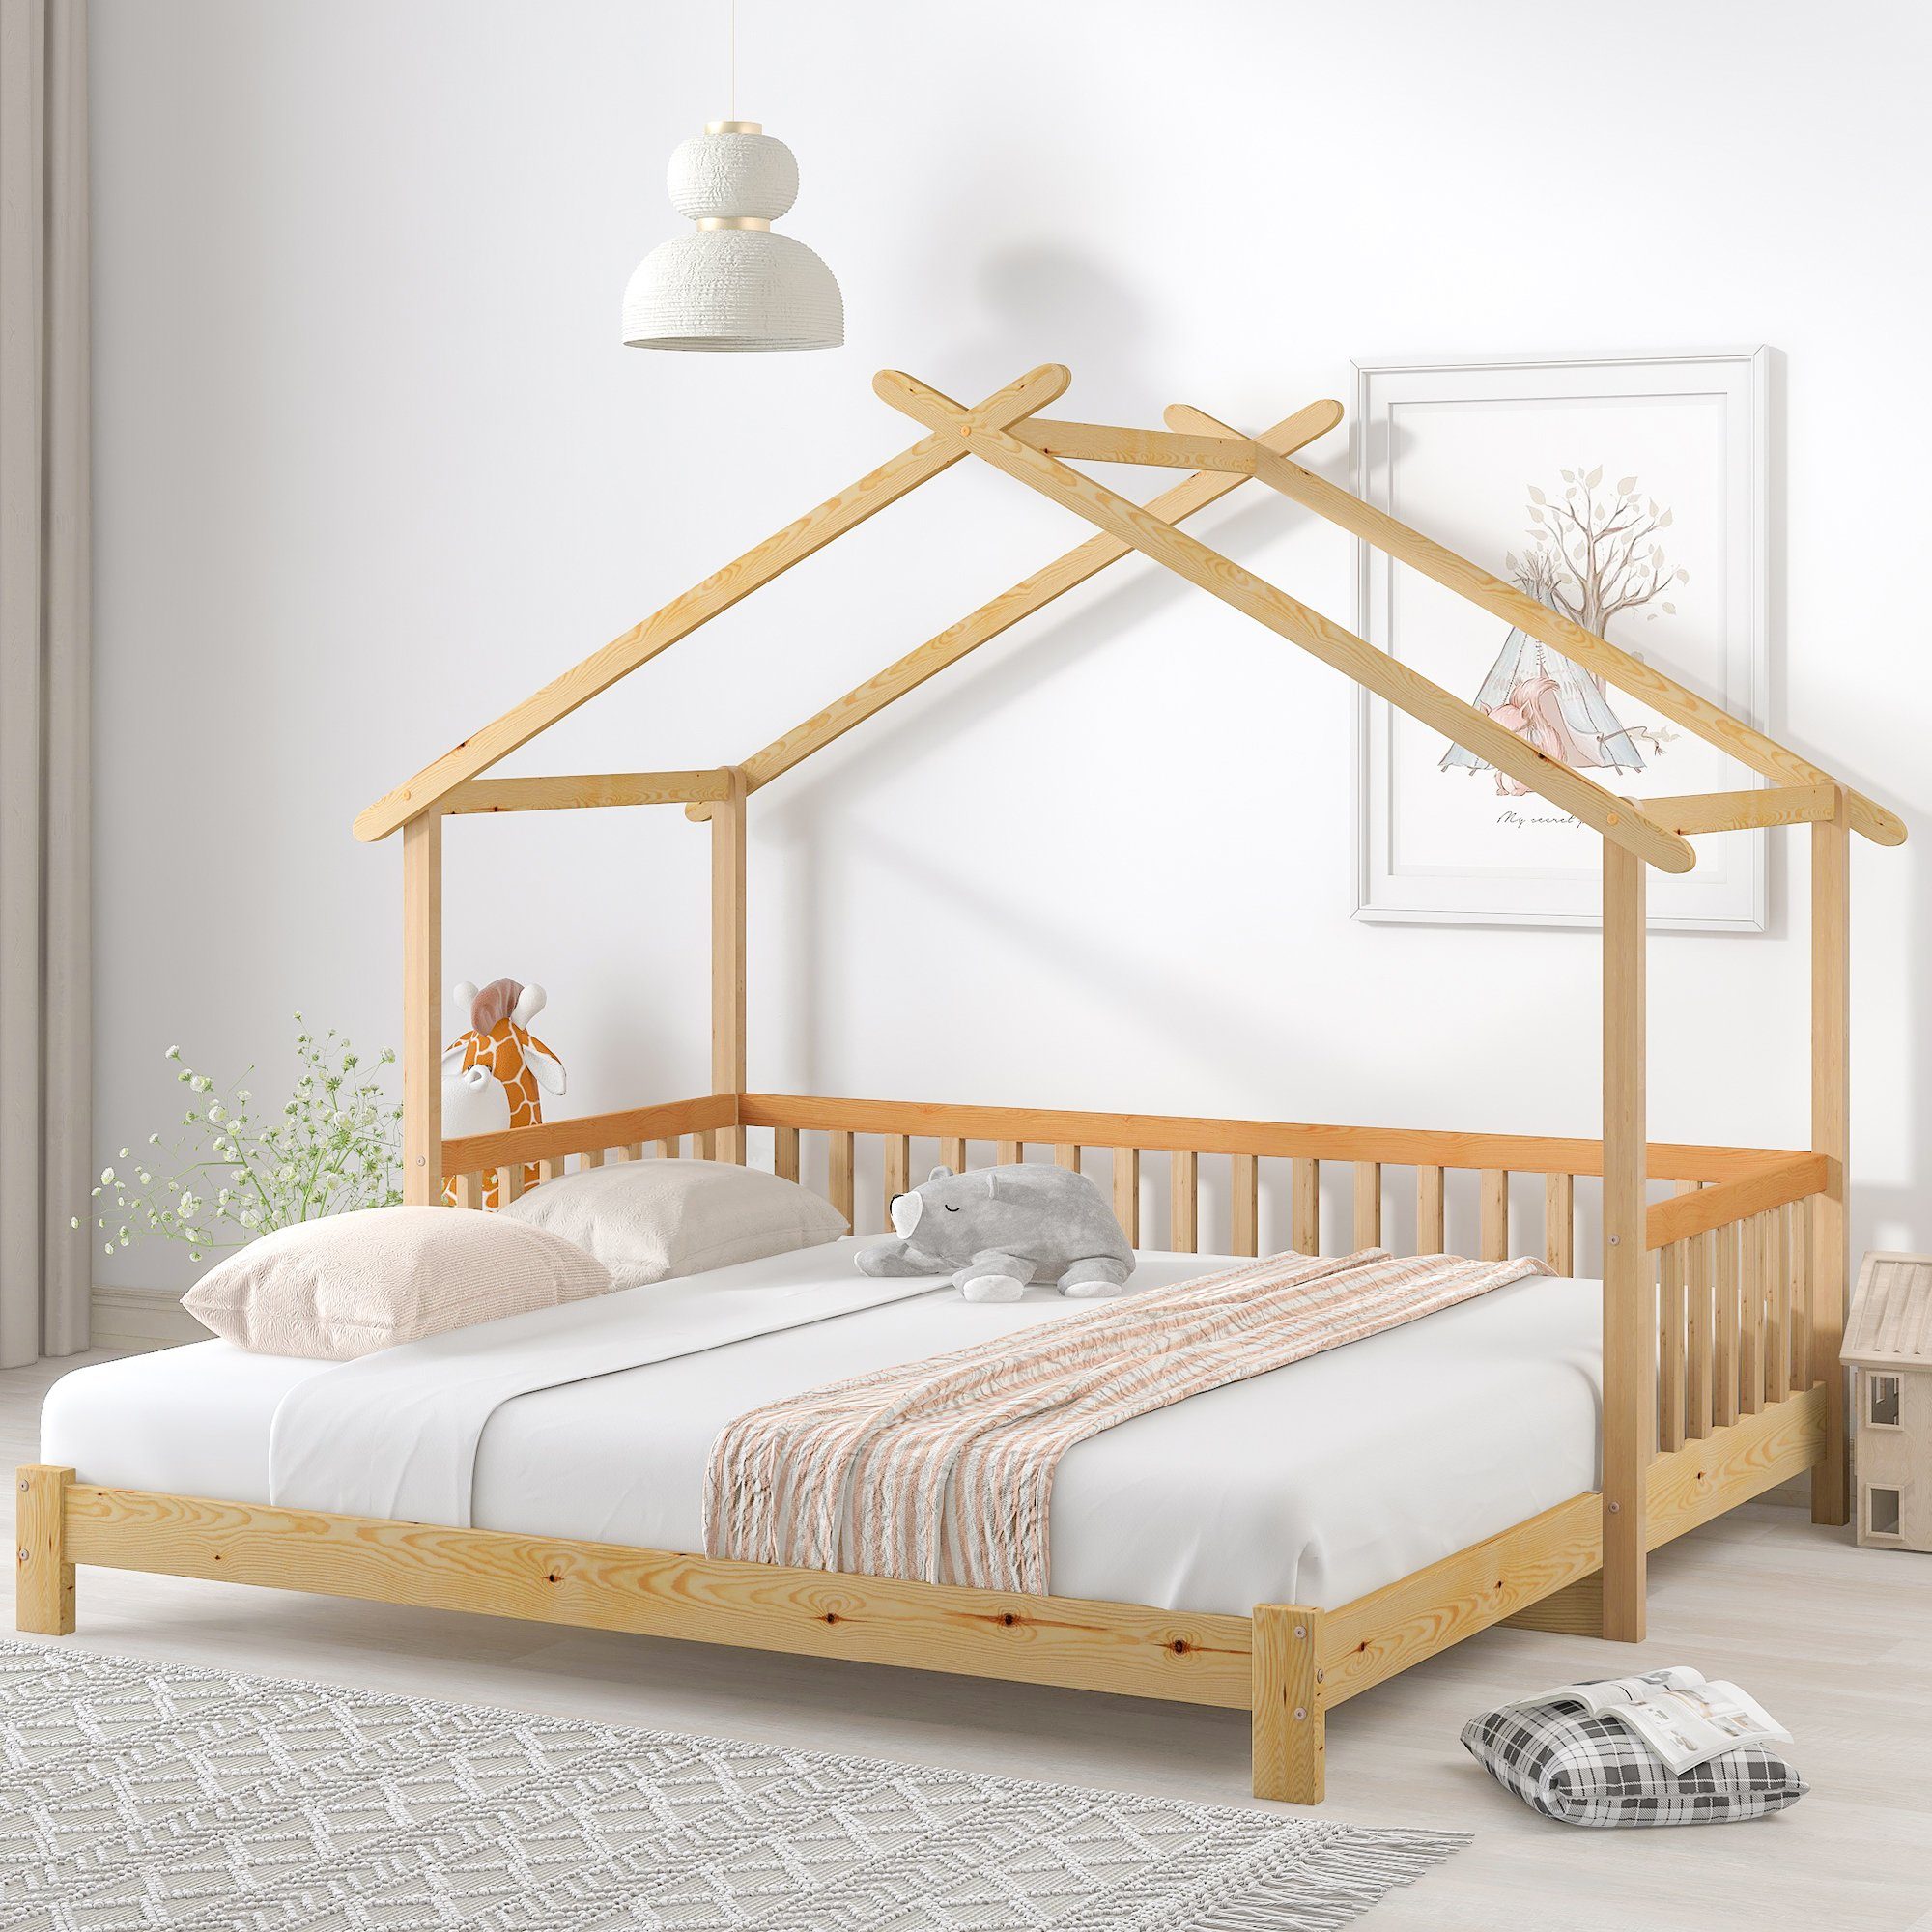 Sweiko Hausbett, Kinderbett mit Rausfallschutz, Ausziehbares Bett, Kiefer,  90*200cm